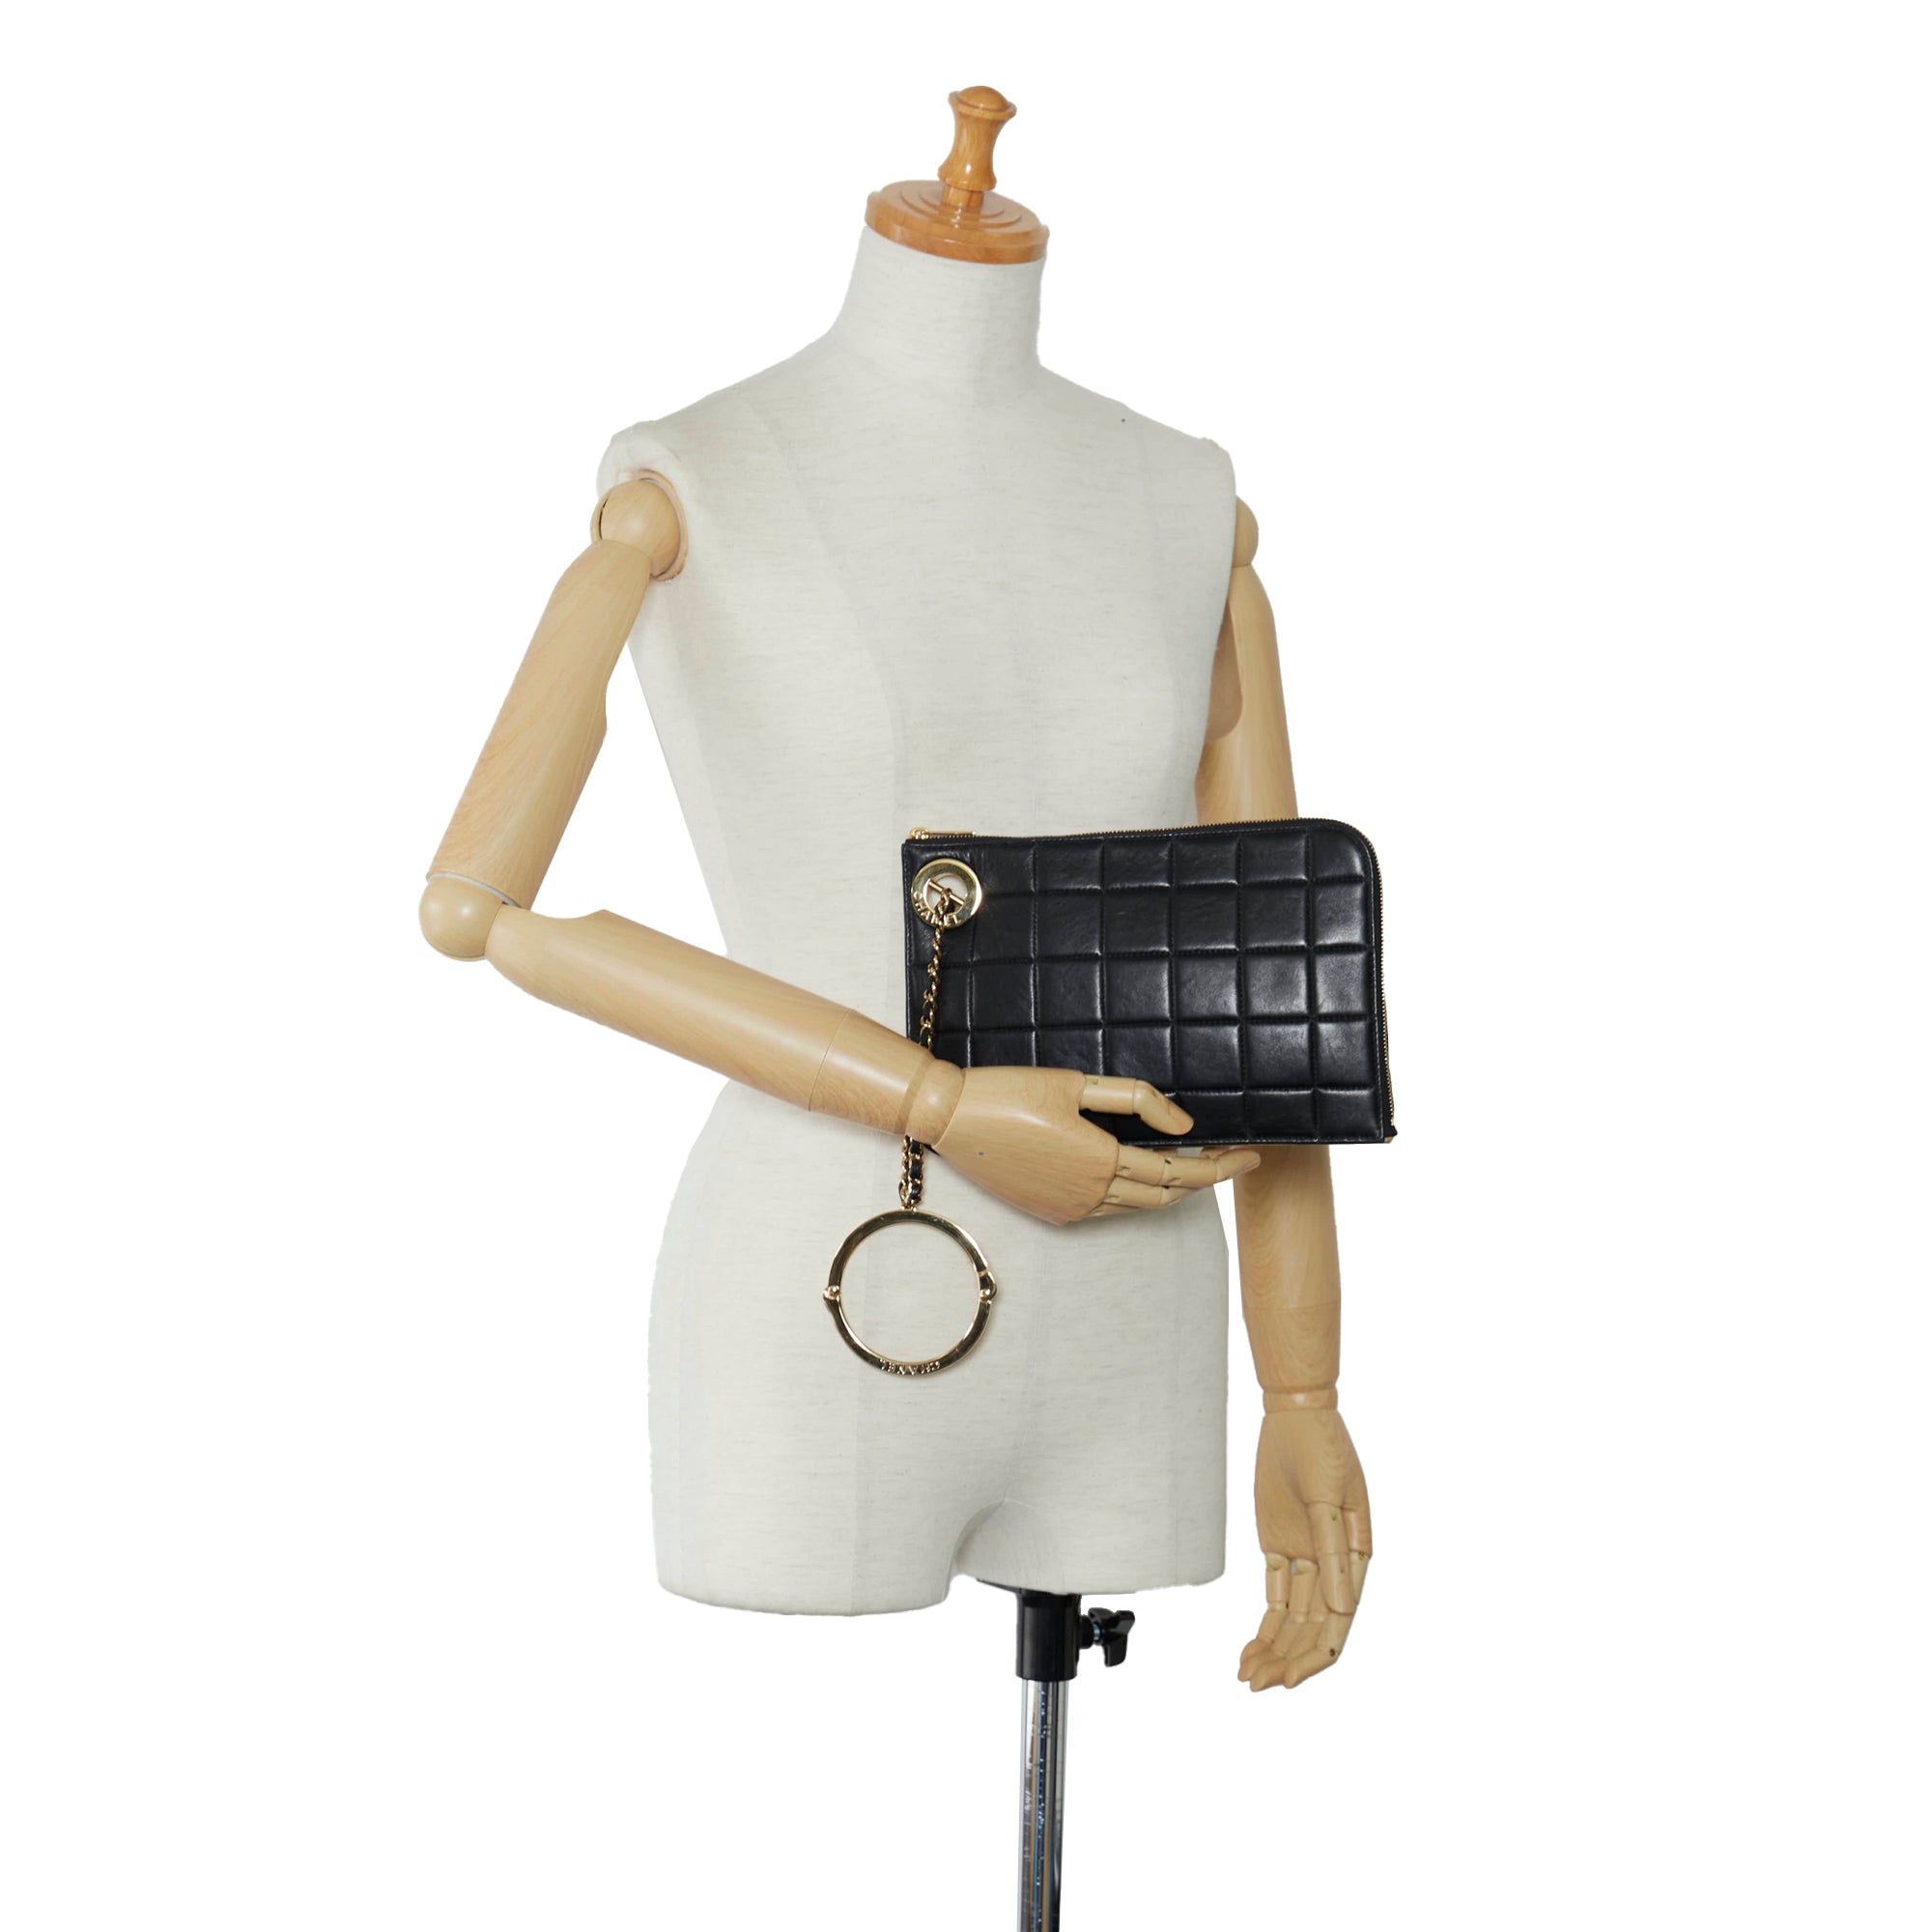 Black Chanel Chocolate Bar Handcuff Wristlet Clutch Bag – Designer